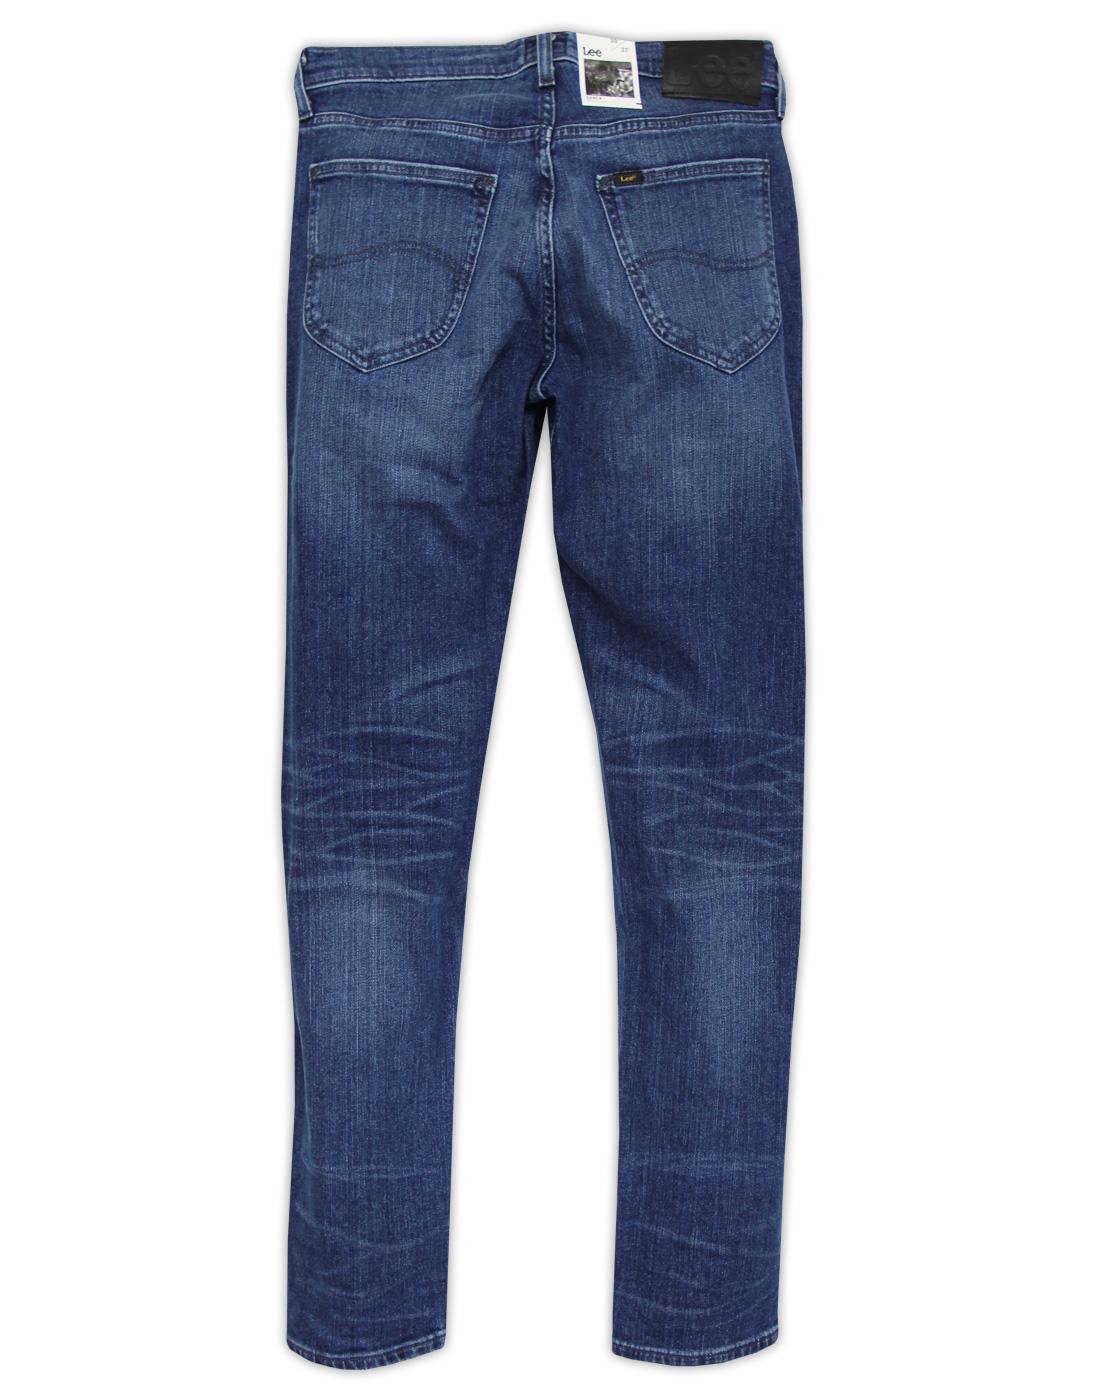 Daren LEE Men's Retro Mod Regular Slim Banshee Worn Denim Jeans